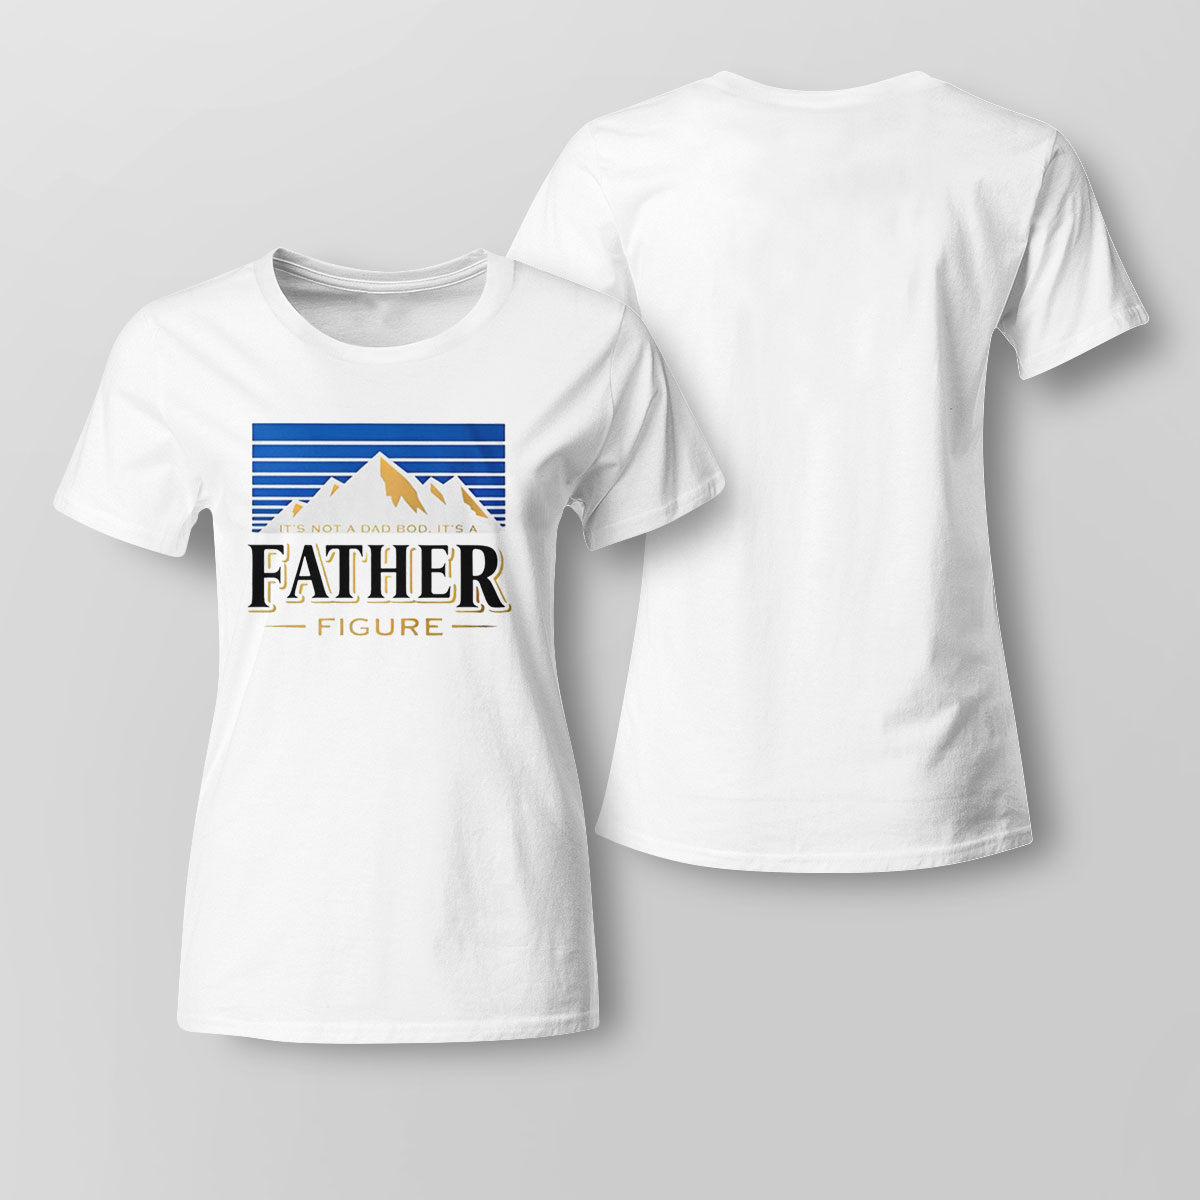 Its Not A Dad Bob Its A Father Figure Shirt